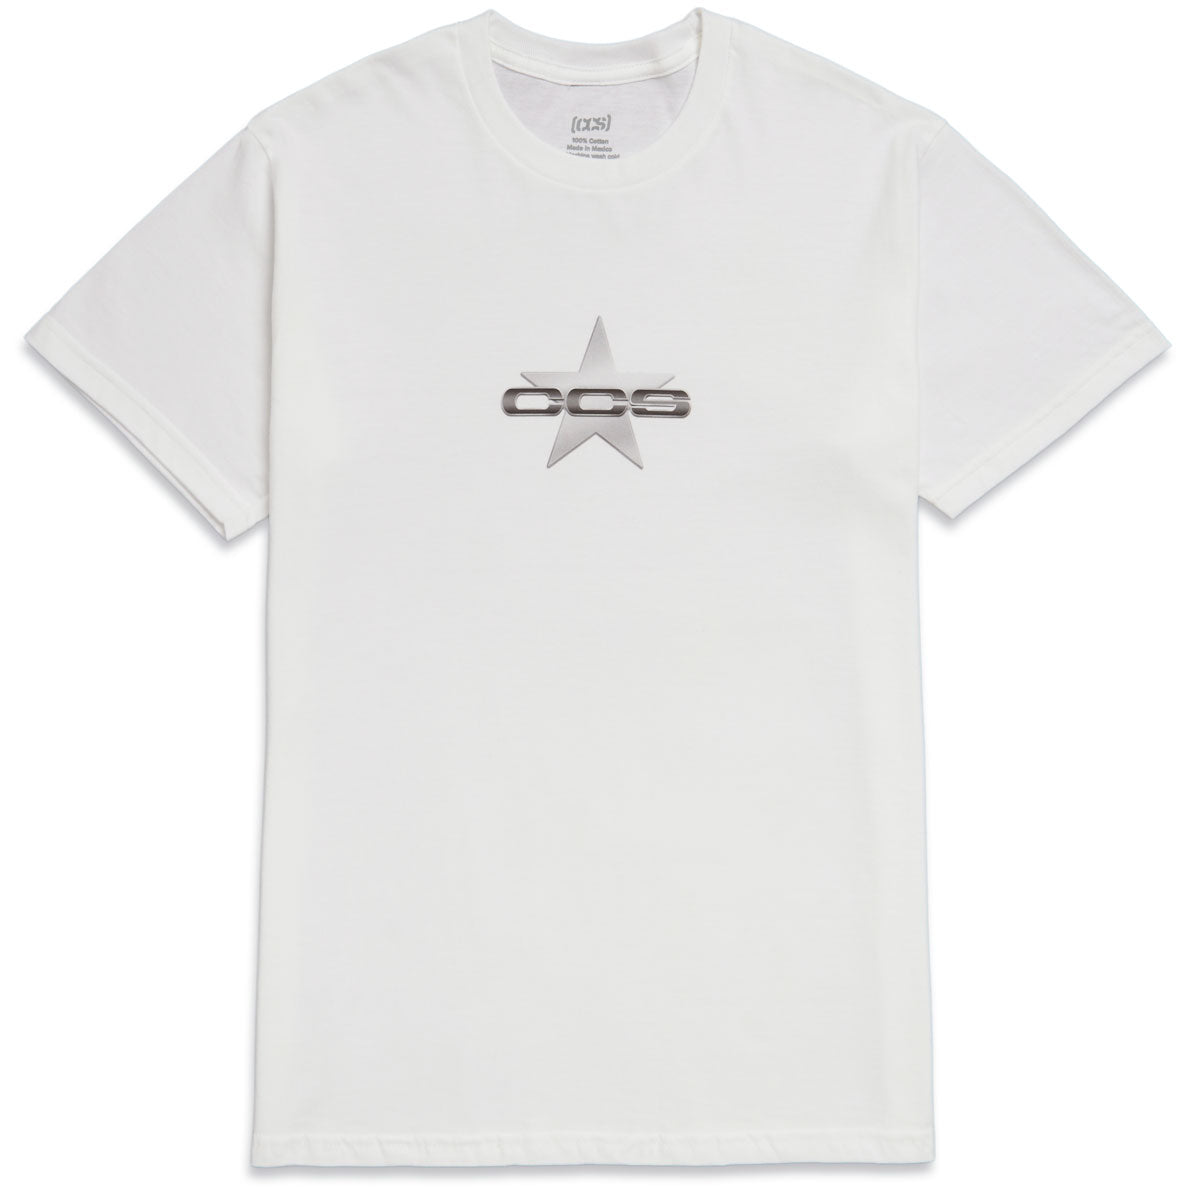 CCS 97 Star T-Shirt - White - LG image 1